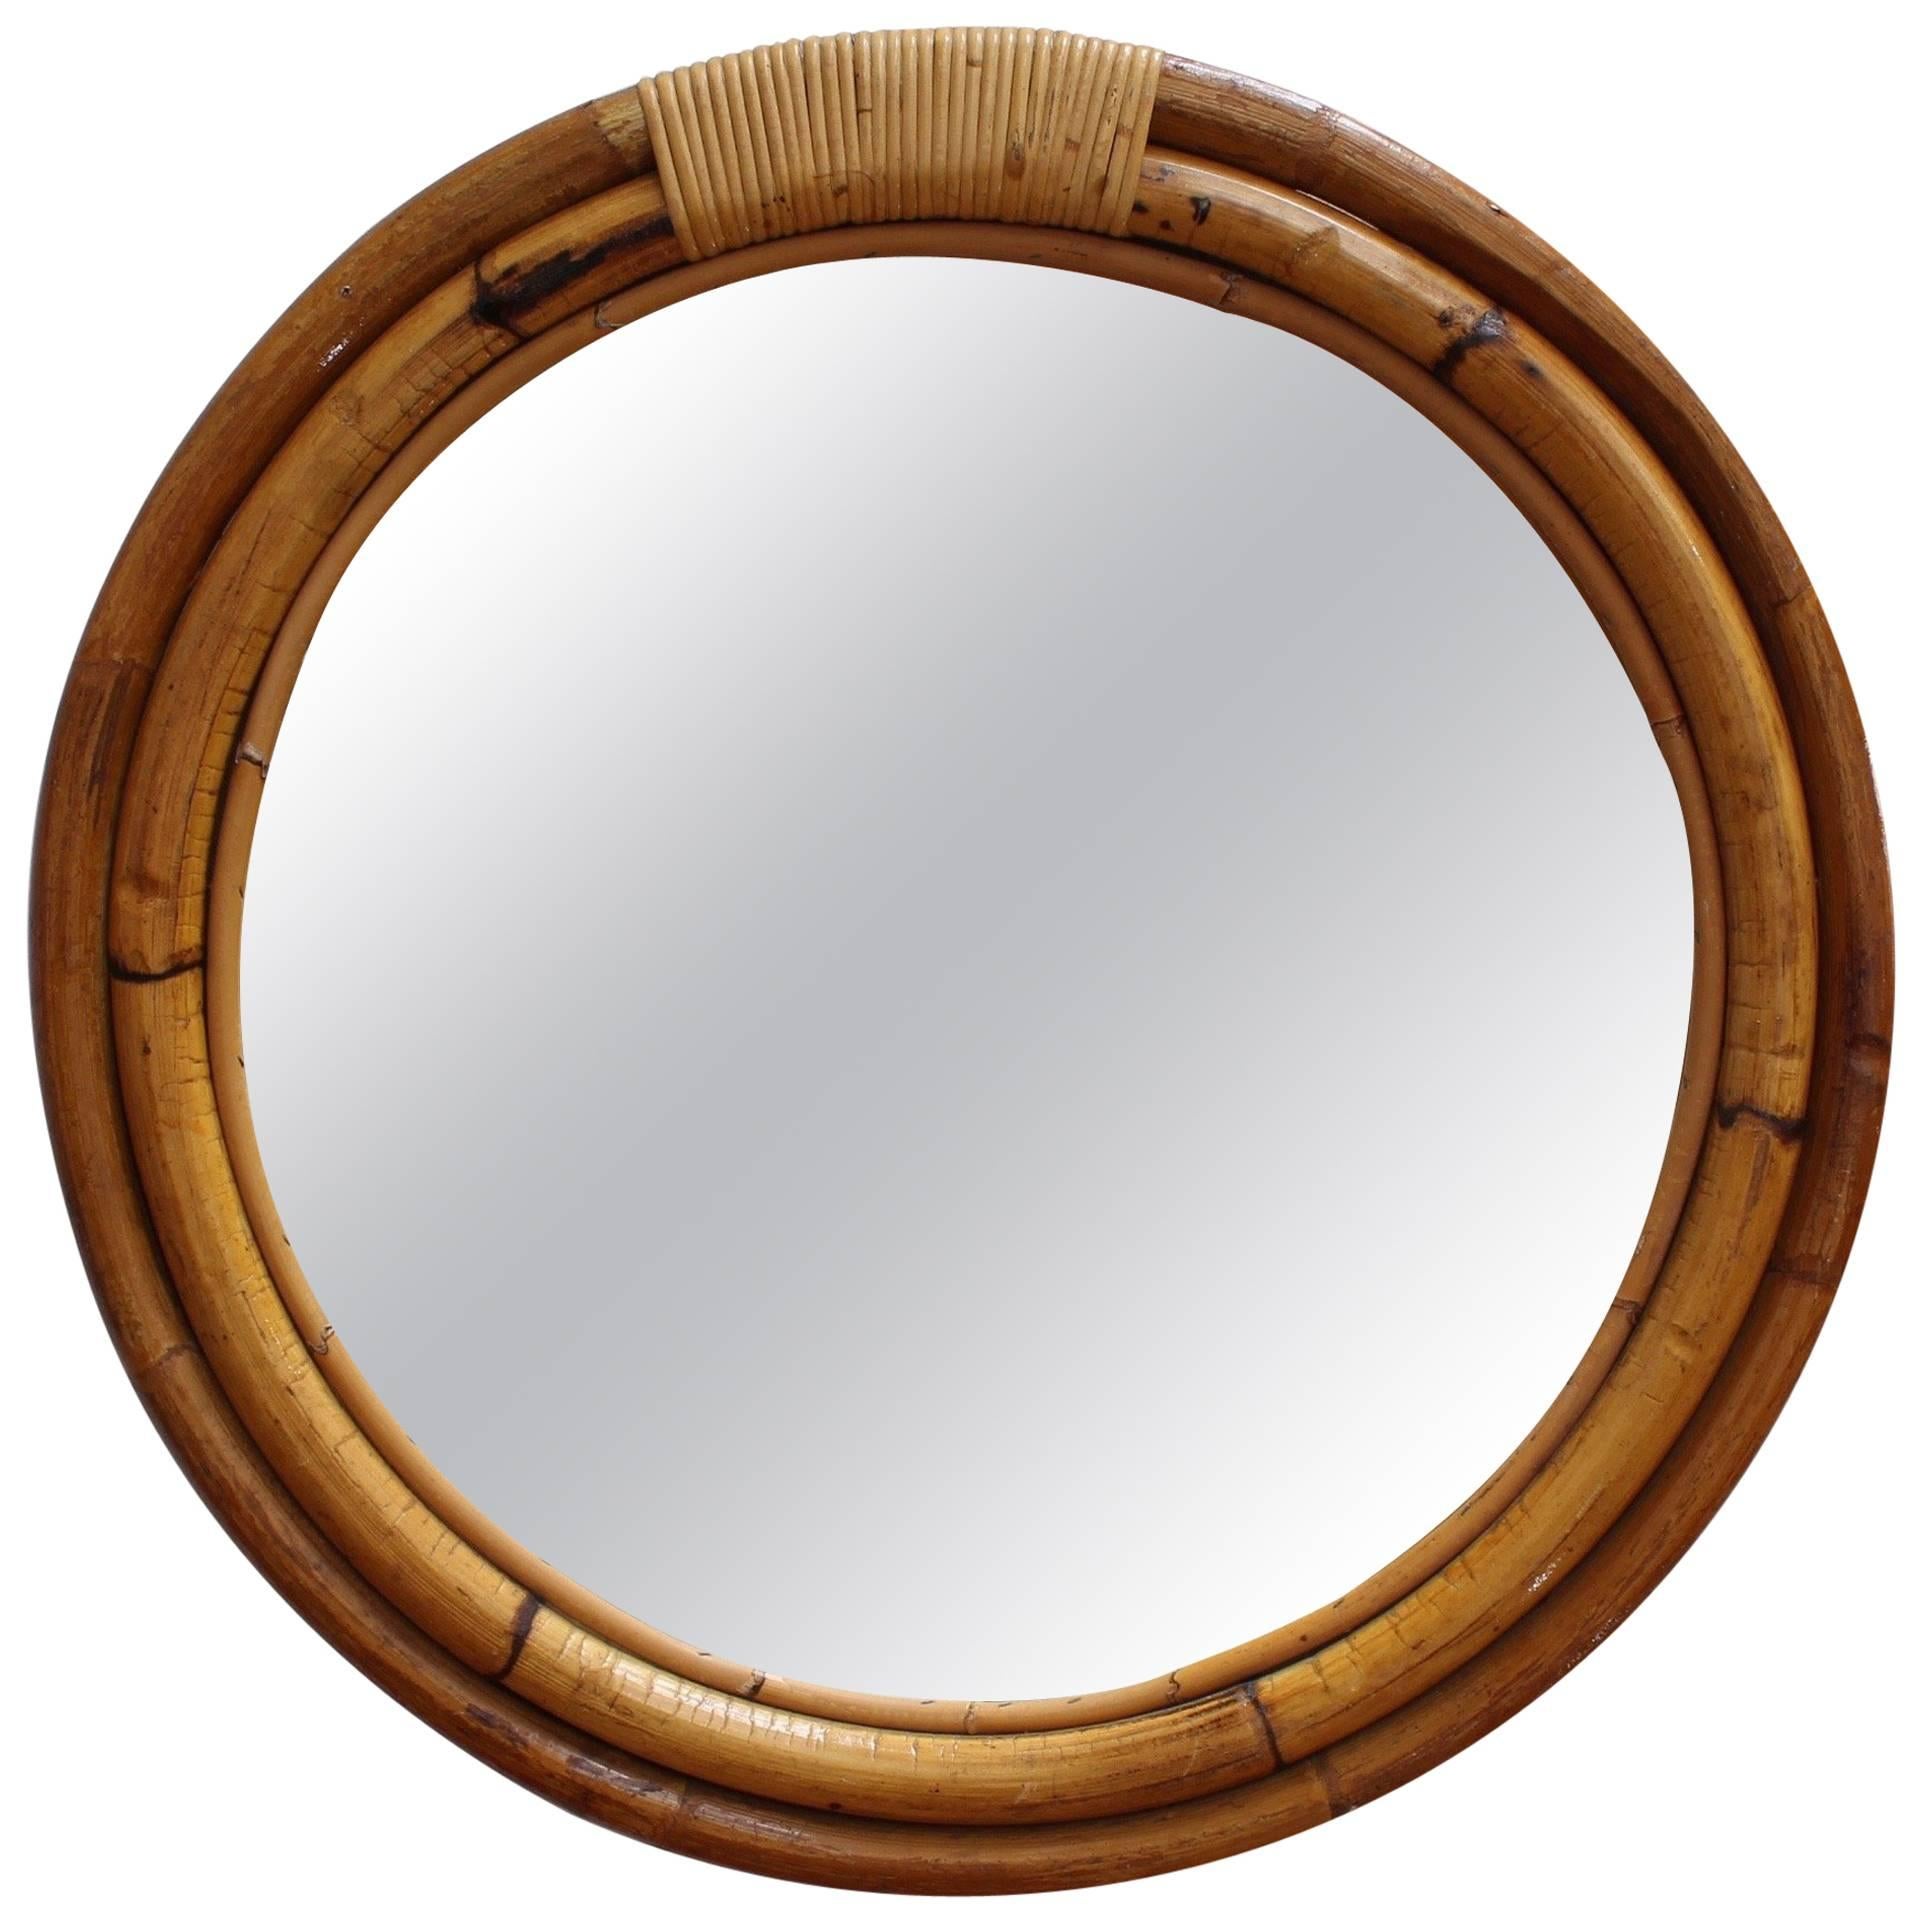 Italian 'Porthole' Style Bamboo and Rattan Mirror (circa 1960s)